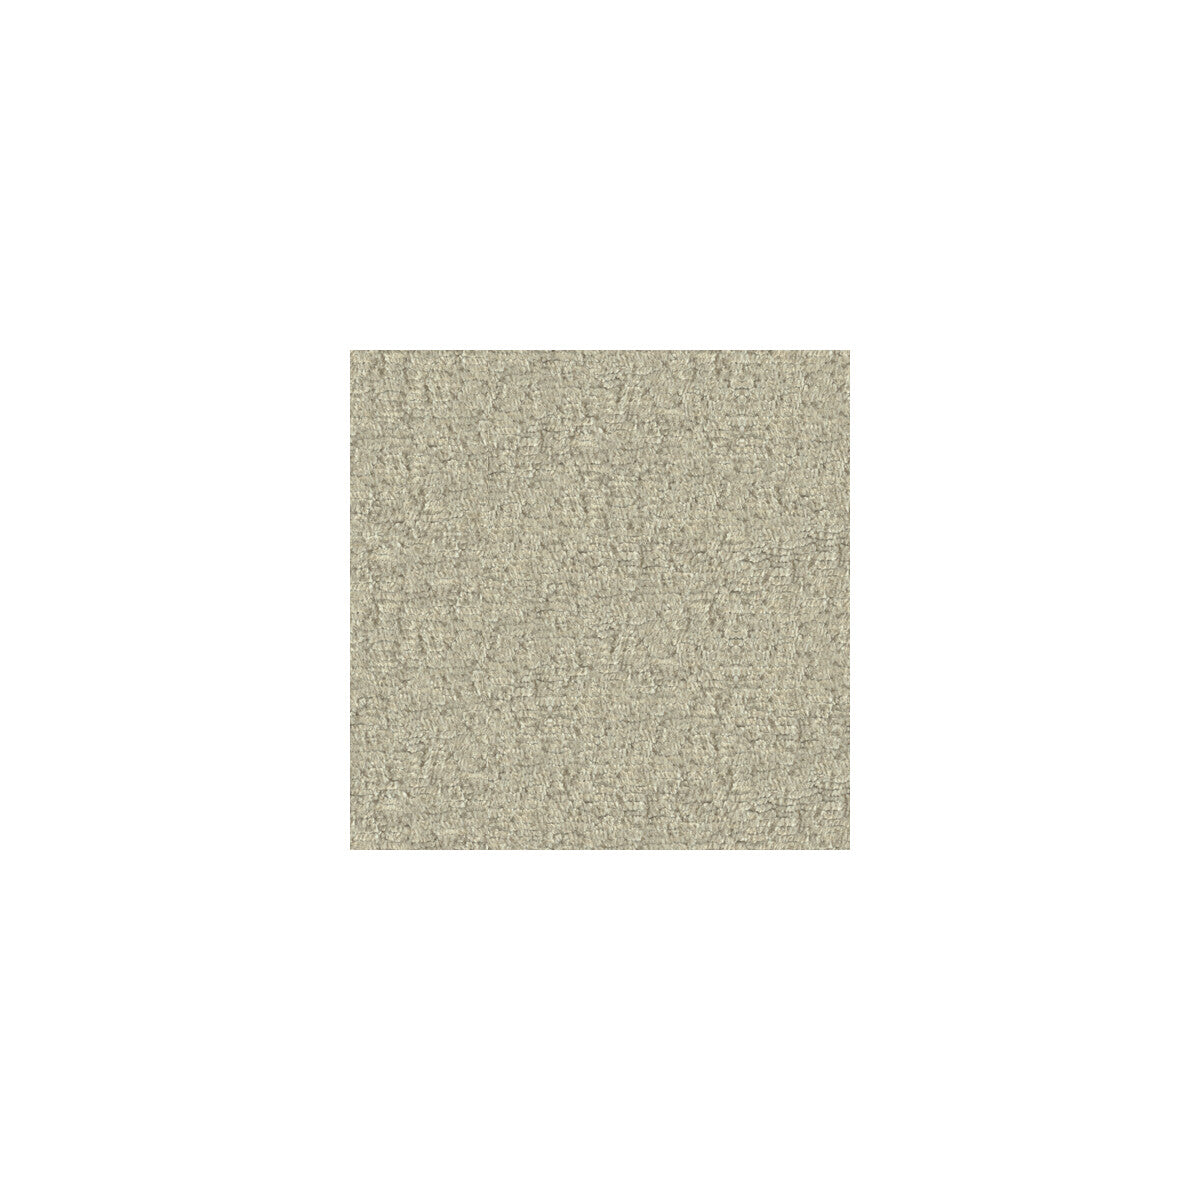 Kravet Smart fabric in 28254-1116 color - pattern 28254.1116.0 - by Kravet Smart